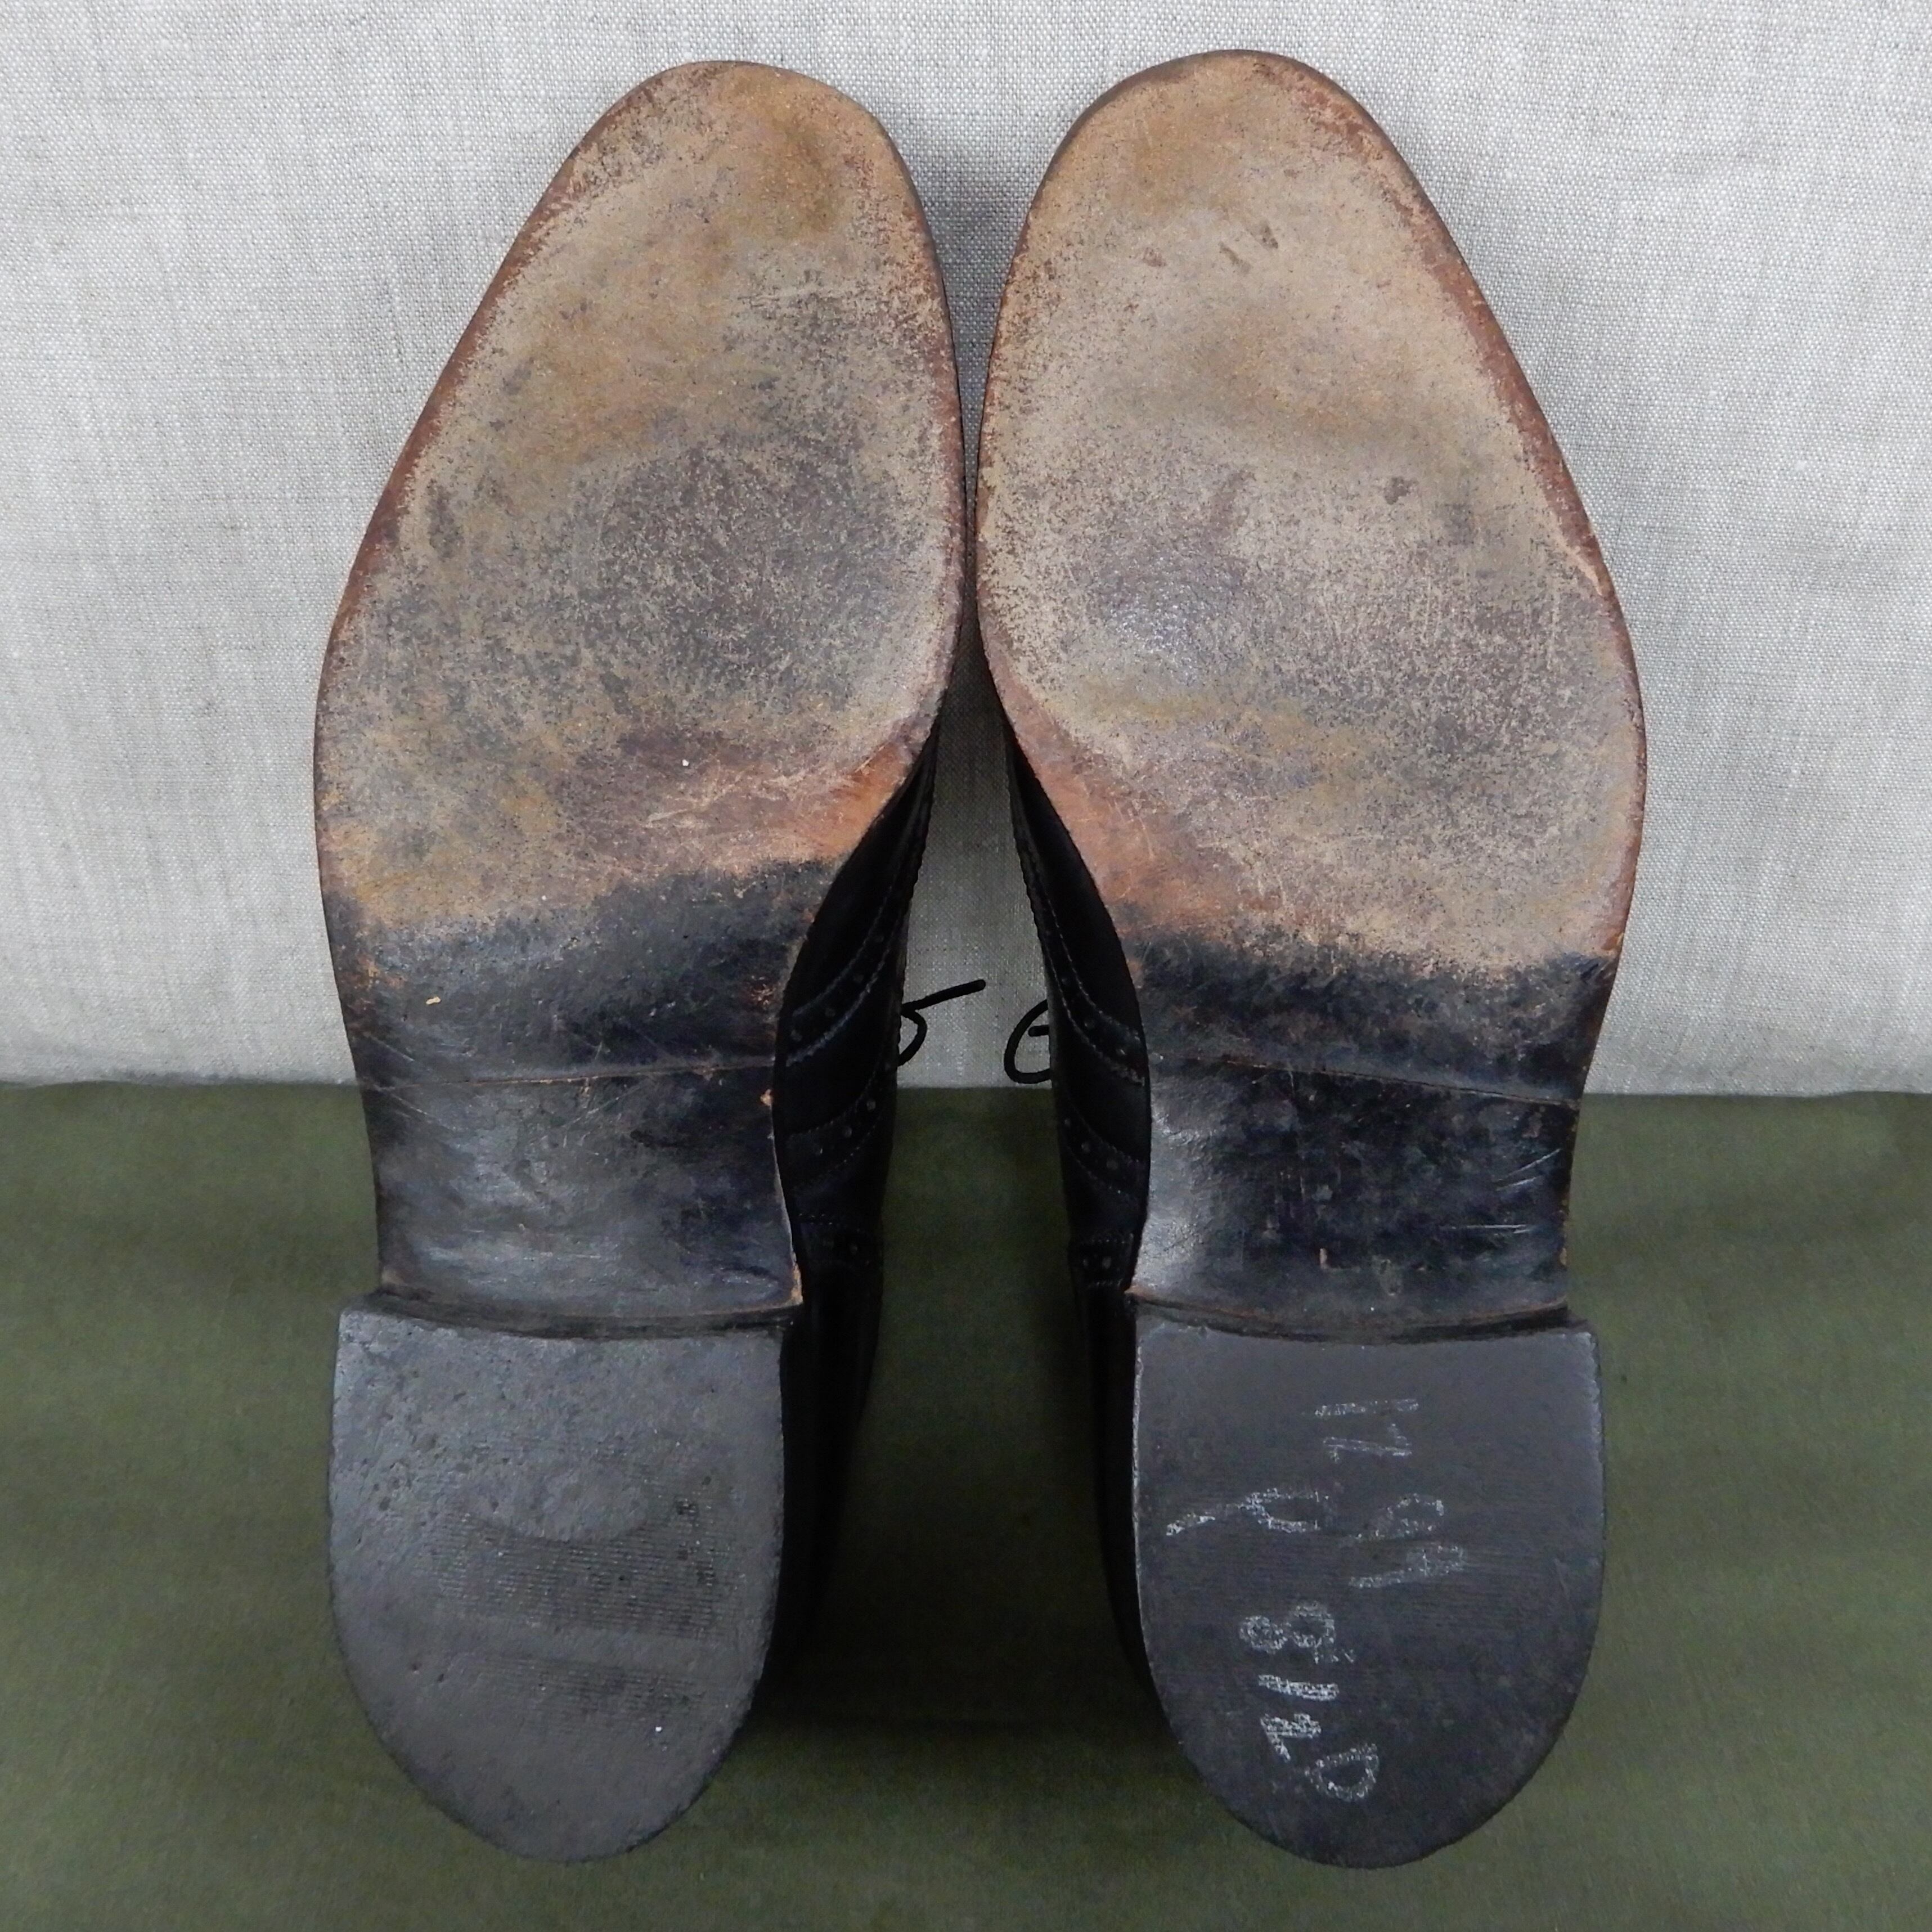 Footjoy Wing Tip Shoes 1970s Size8.5D BK